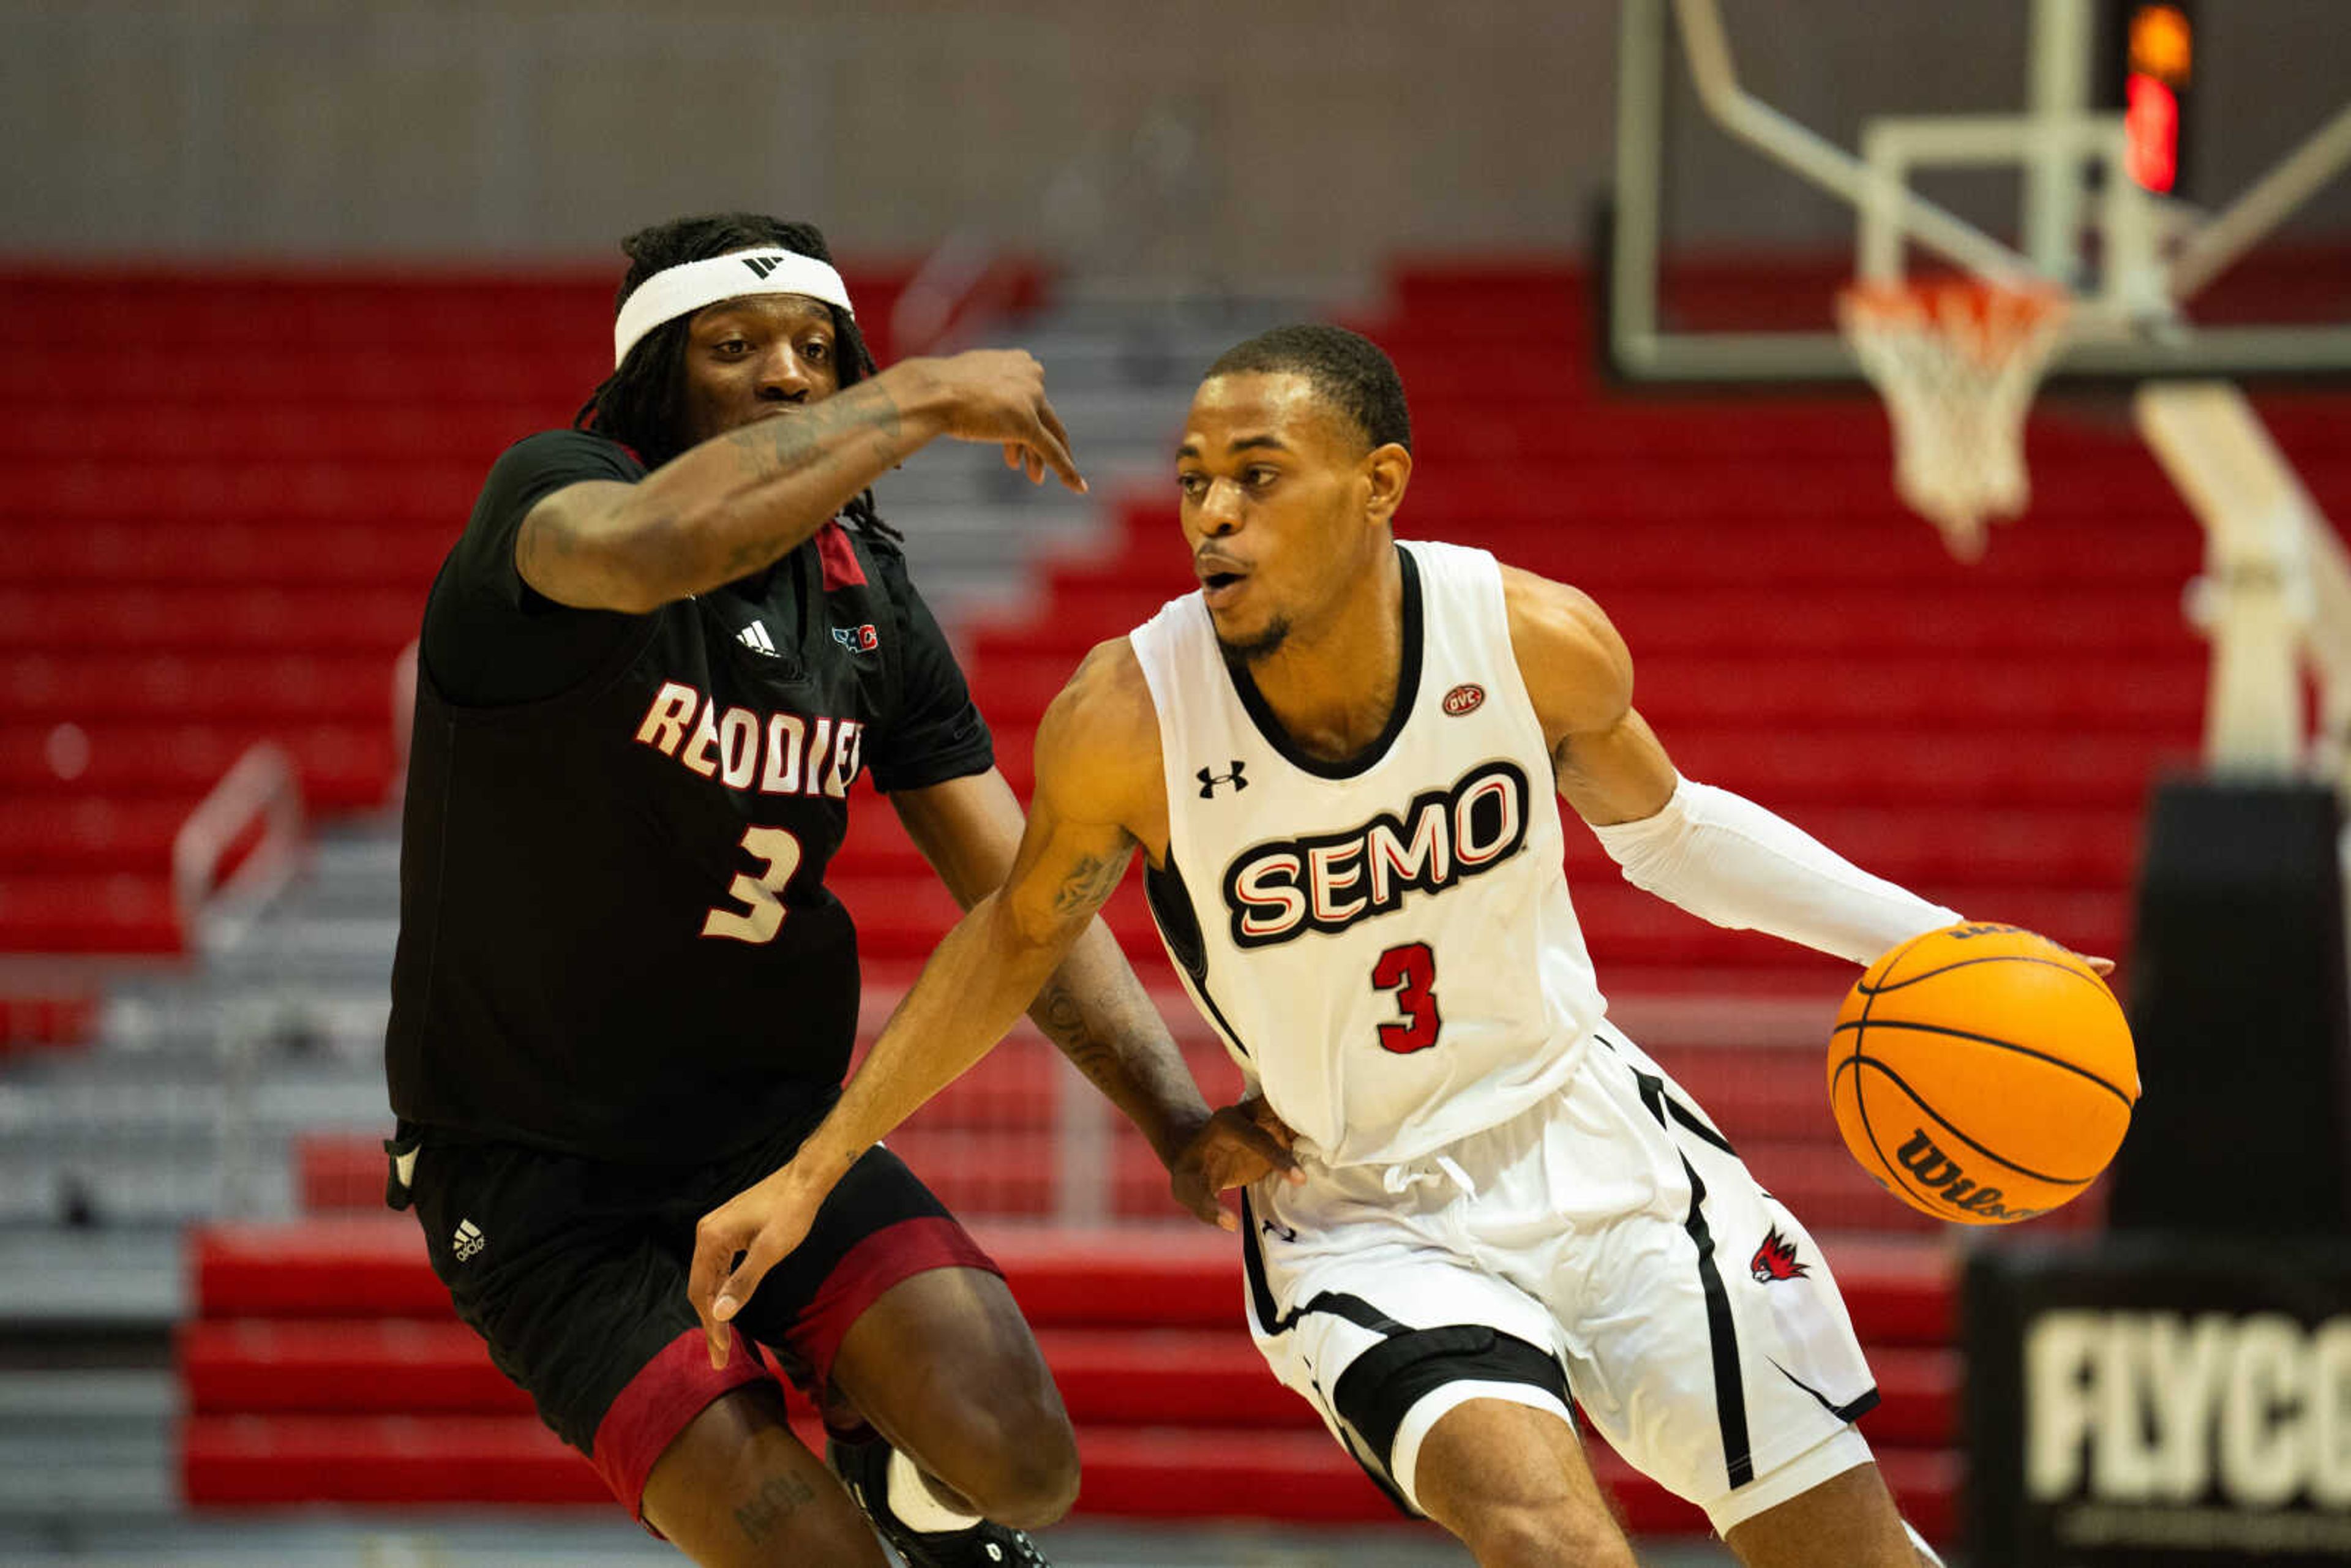 SEMO men’s basketball defeats Henderson State University 76-61 in exhibition